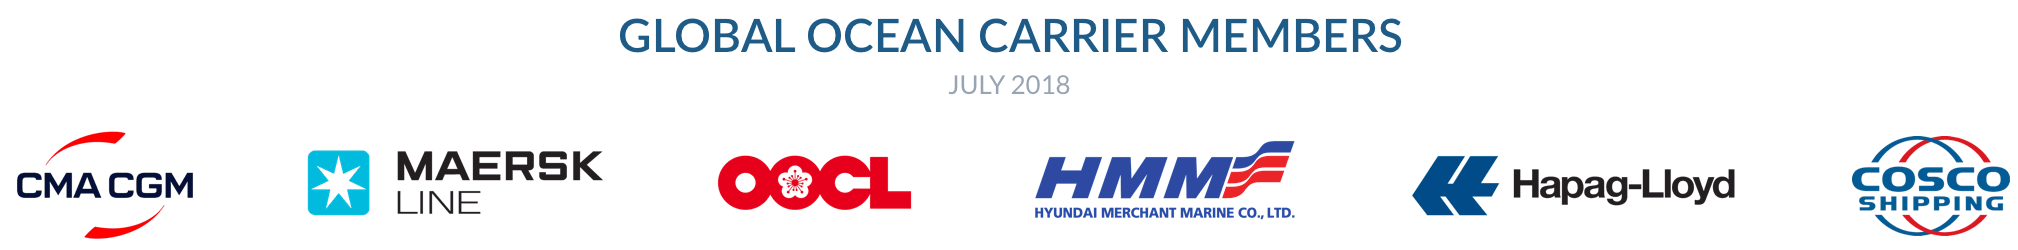 NYSHEX Ocean Carrier Members account for 52% of global capacity